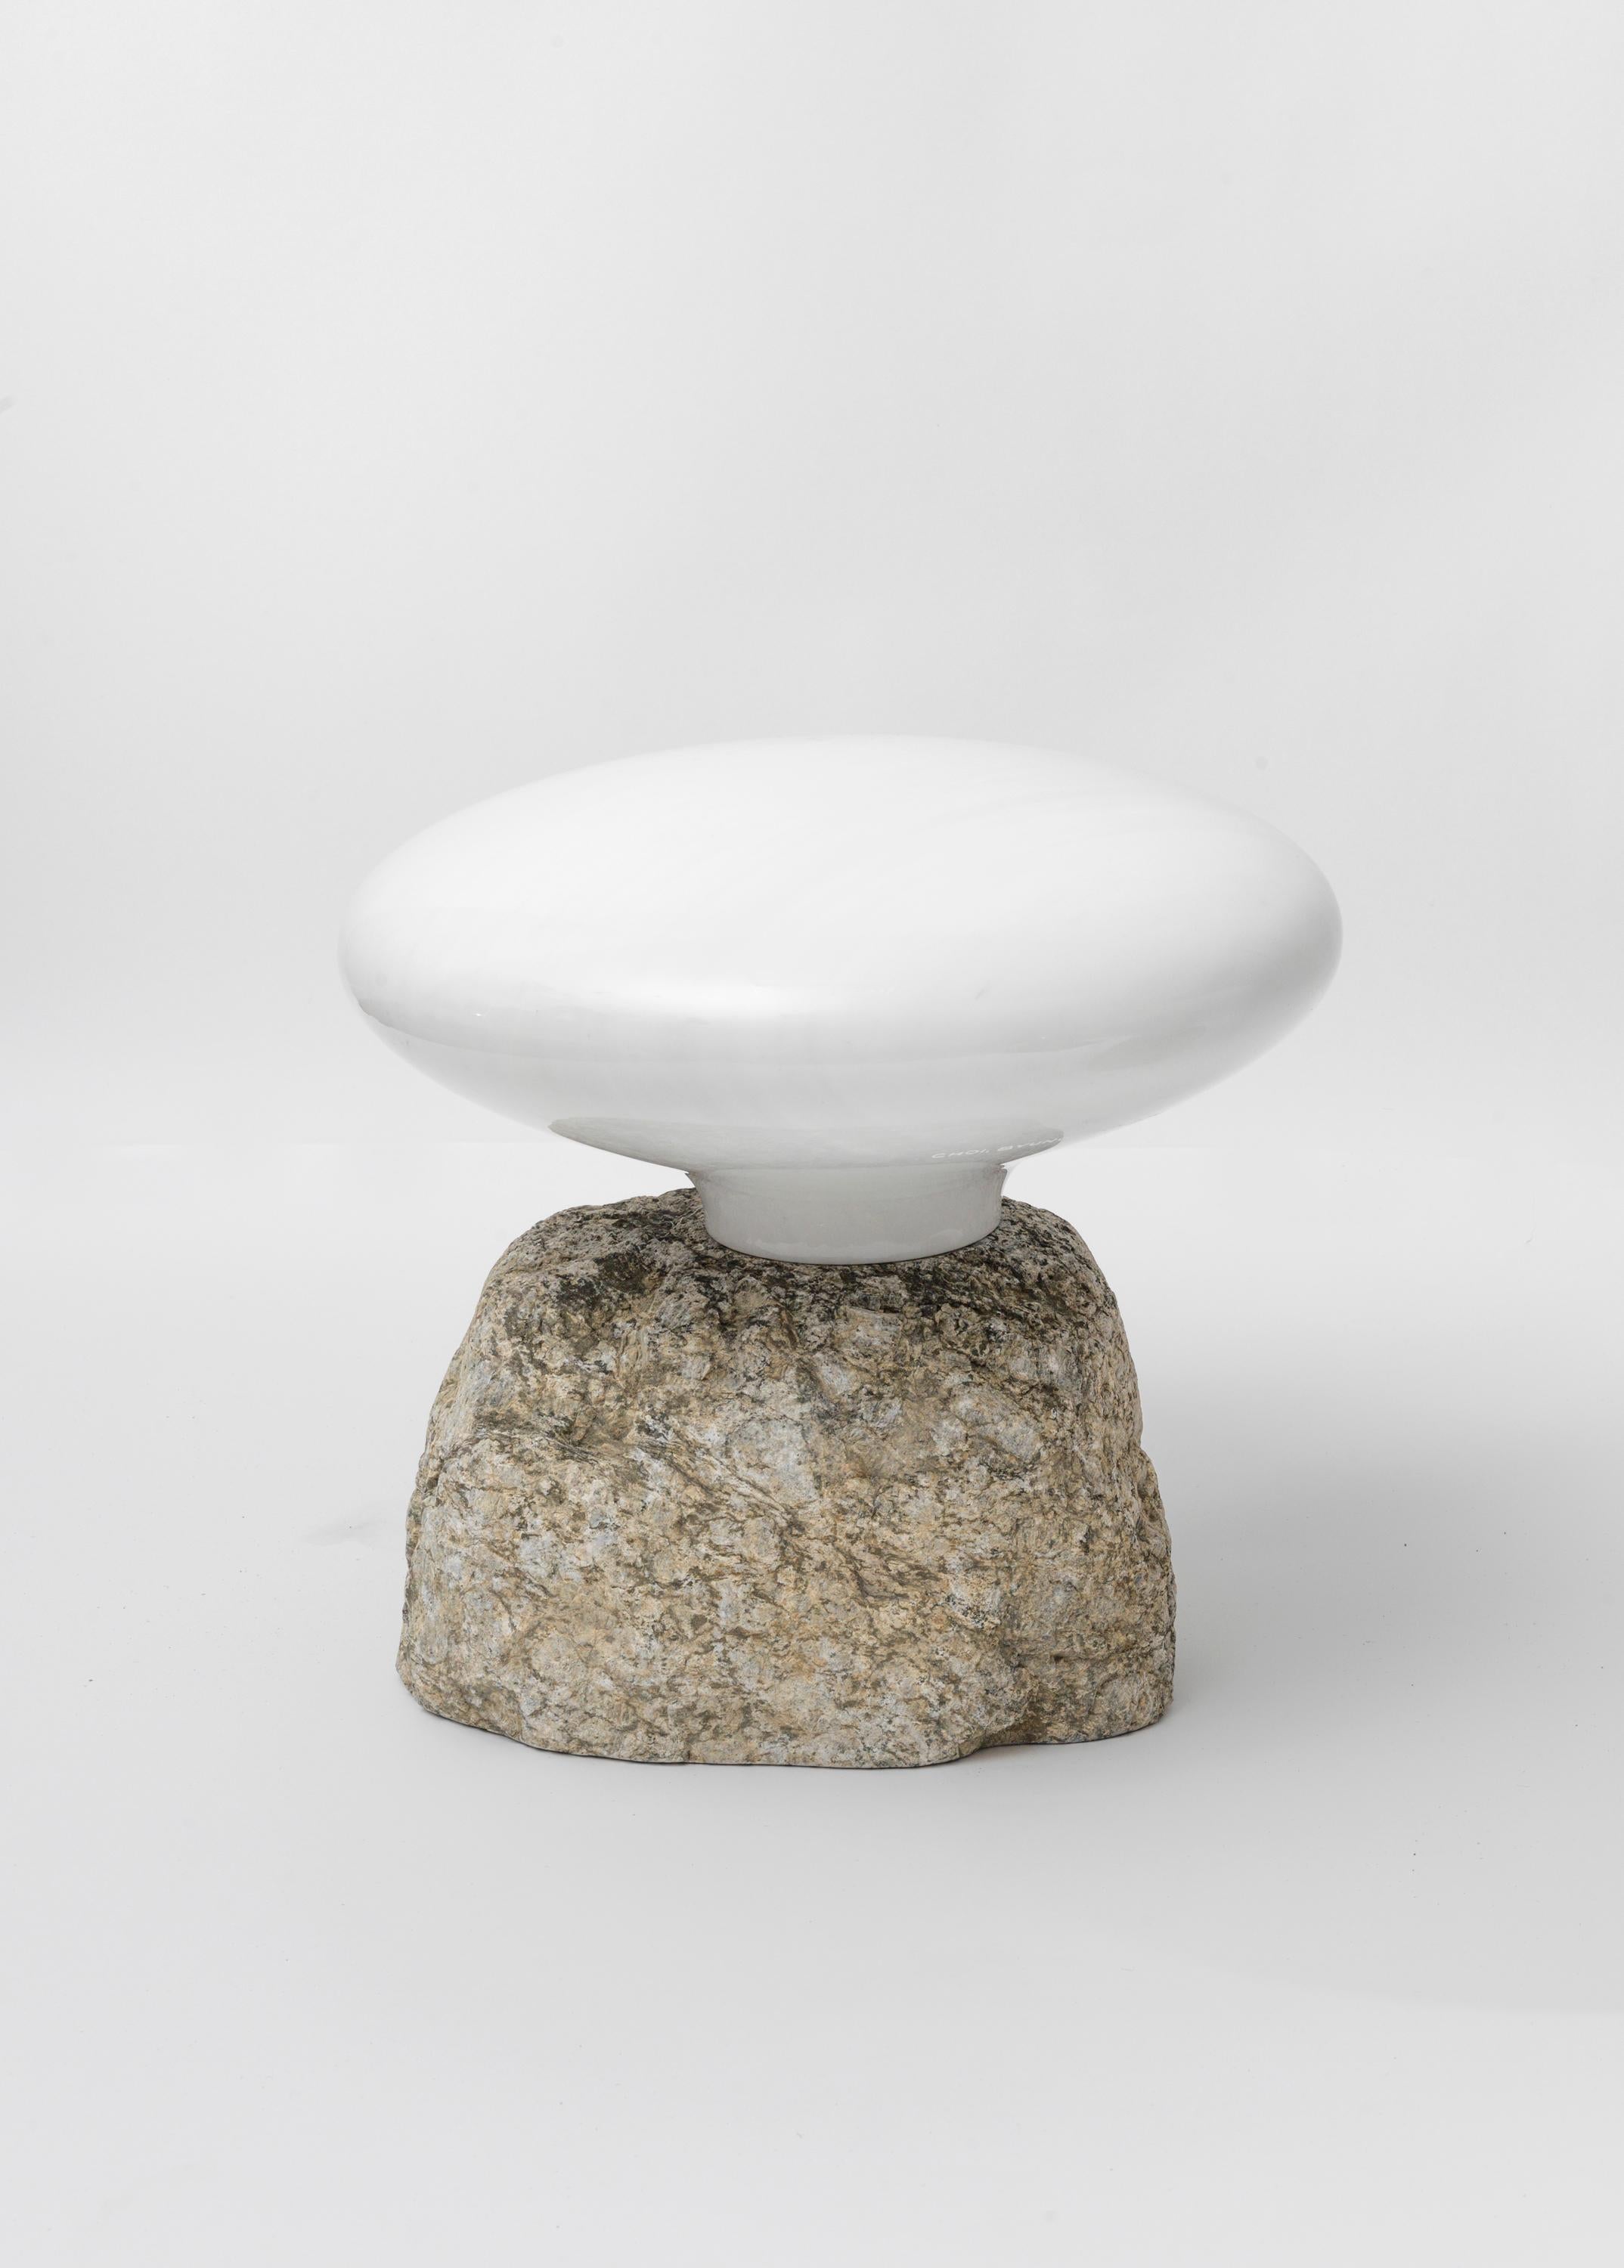 Korean Byung-Hoon Choi, Stool, White Marble, Natural Stone, 2015